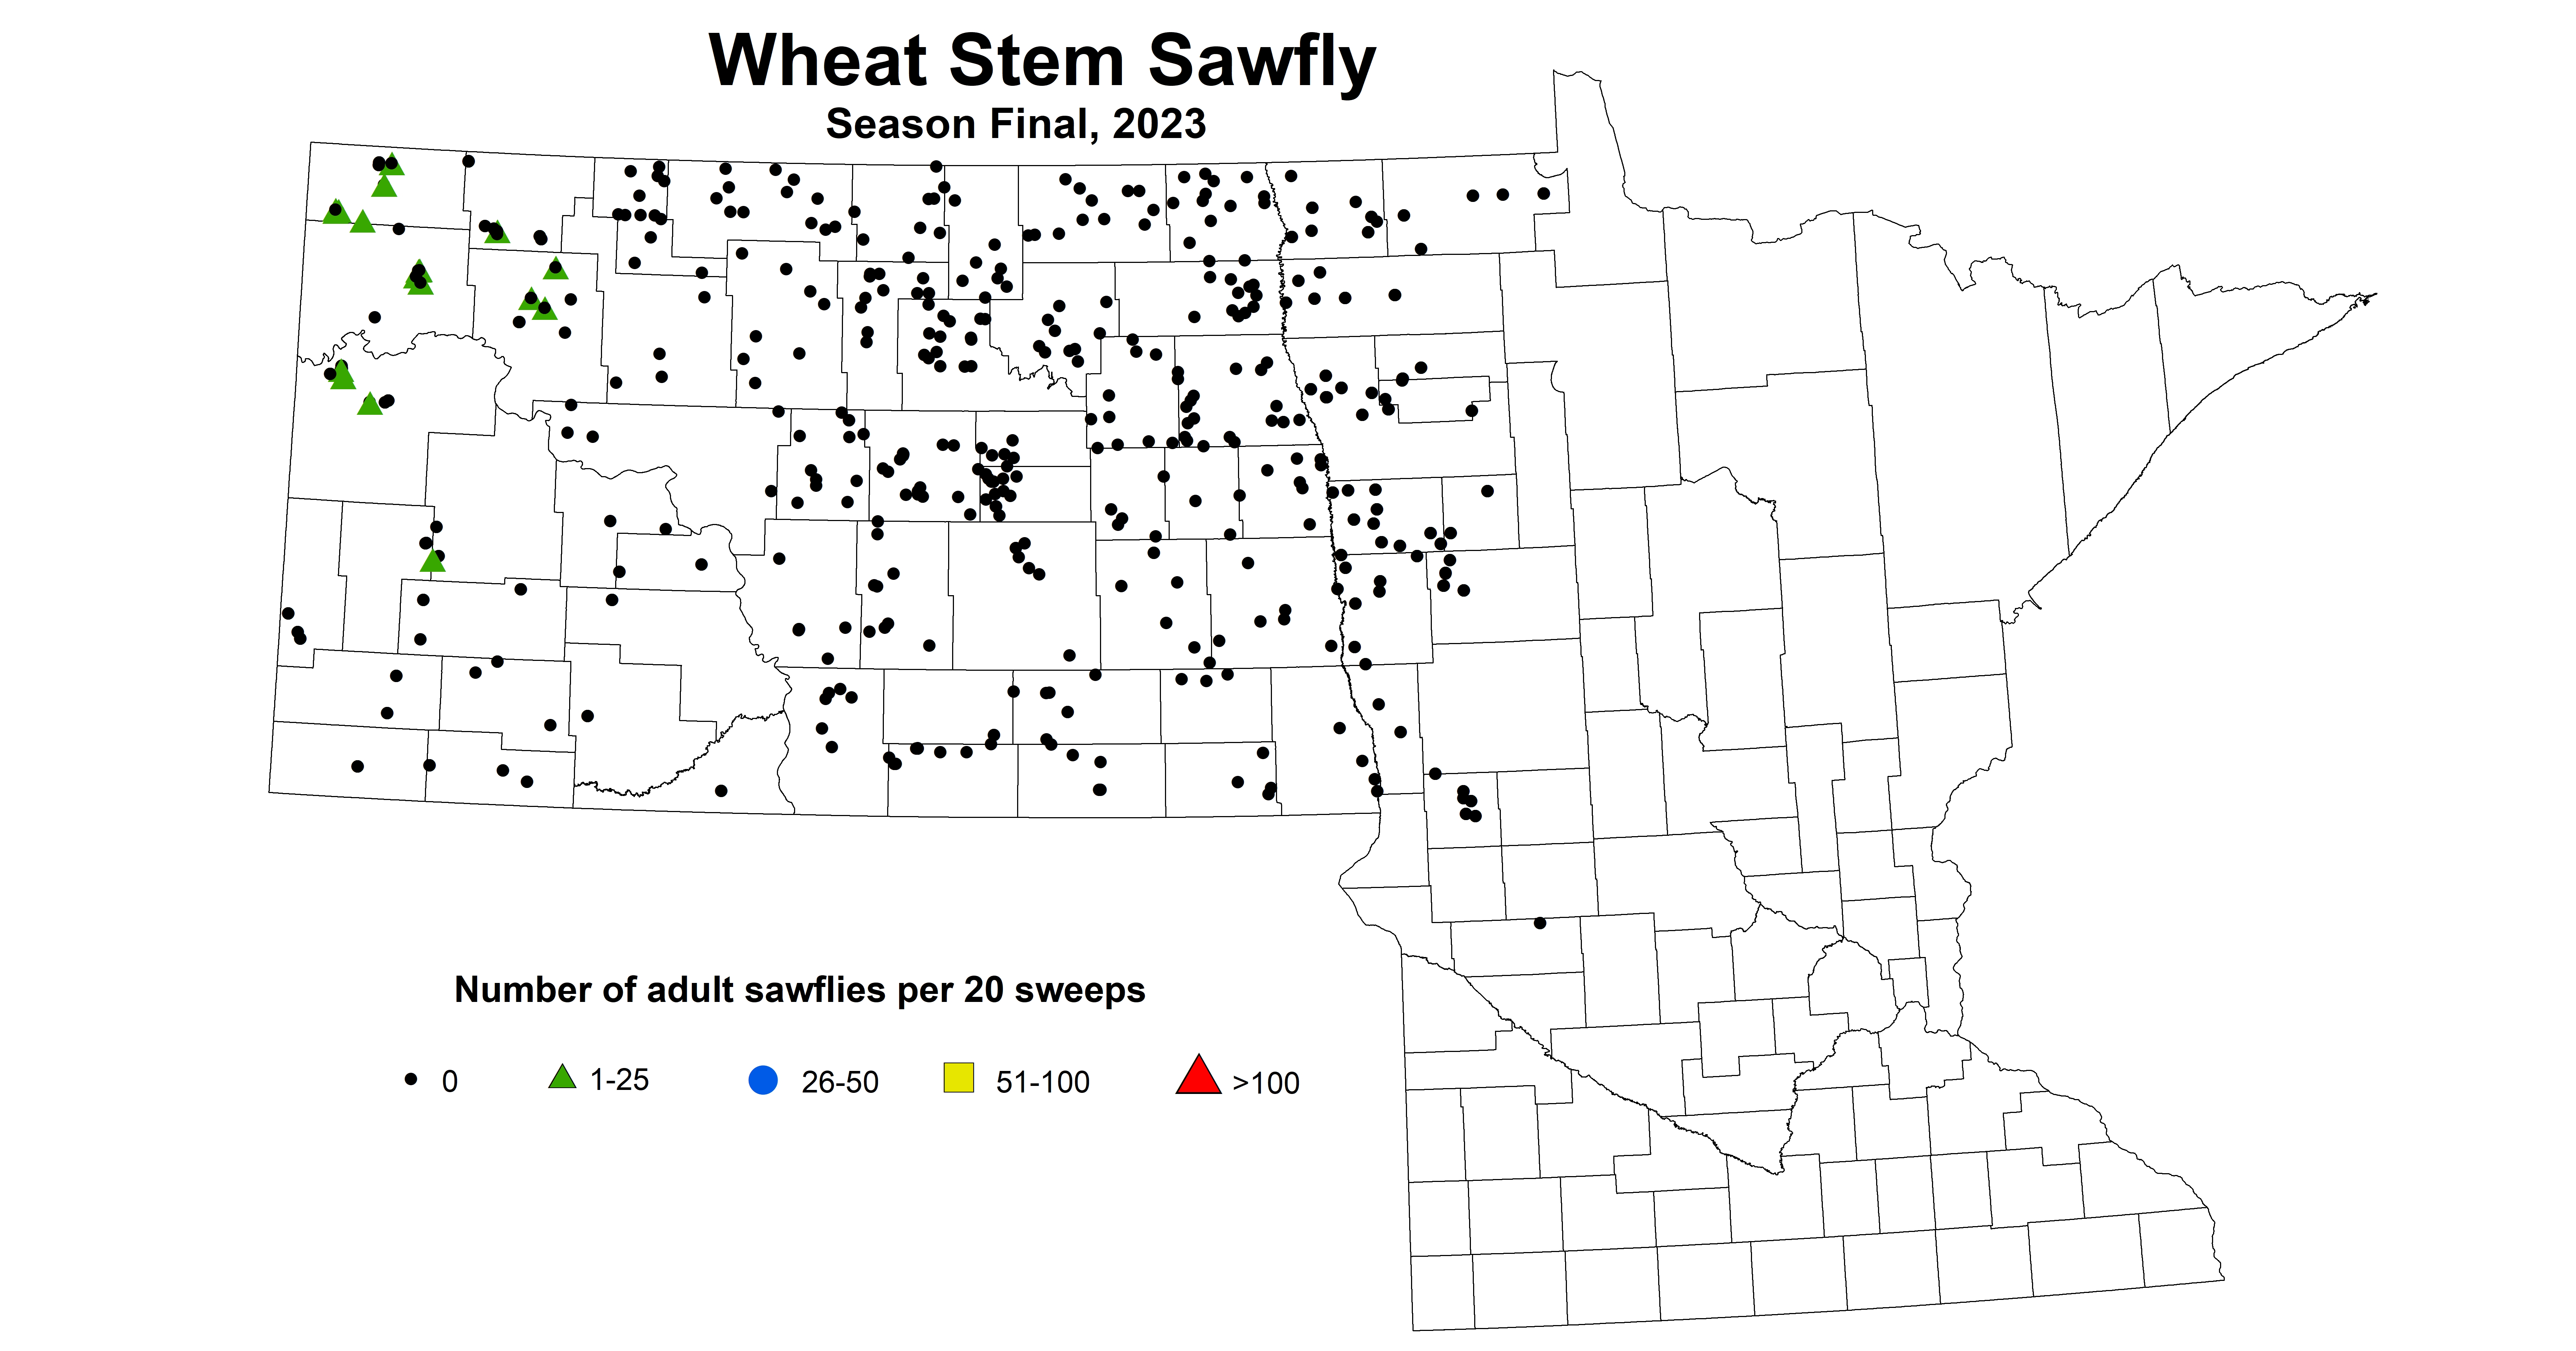 wheat sawfly season final 2023